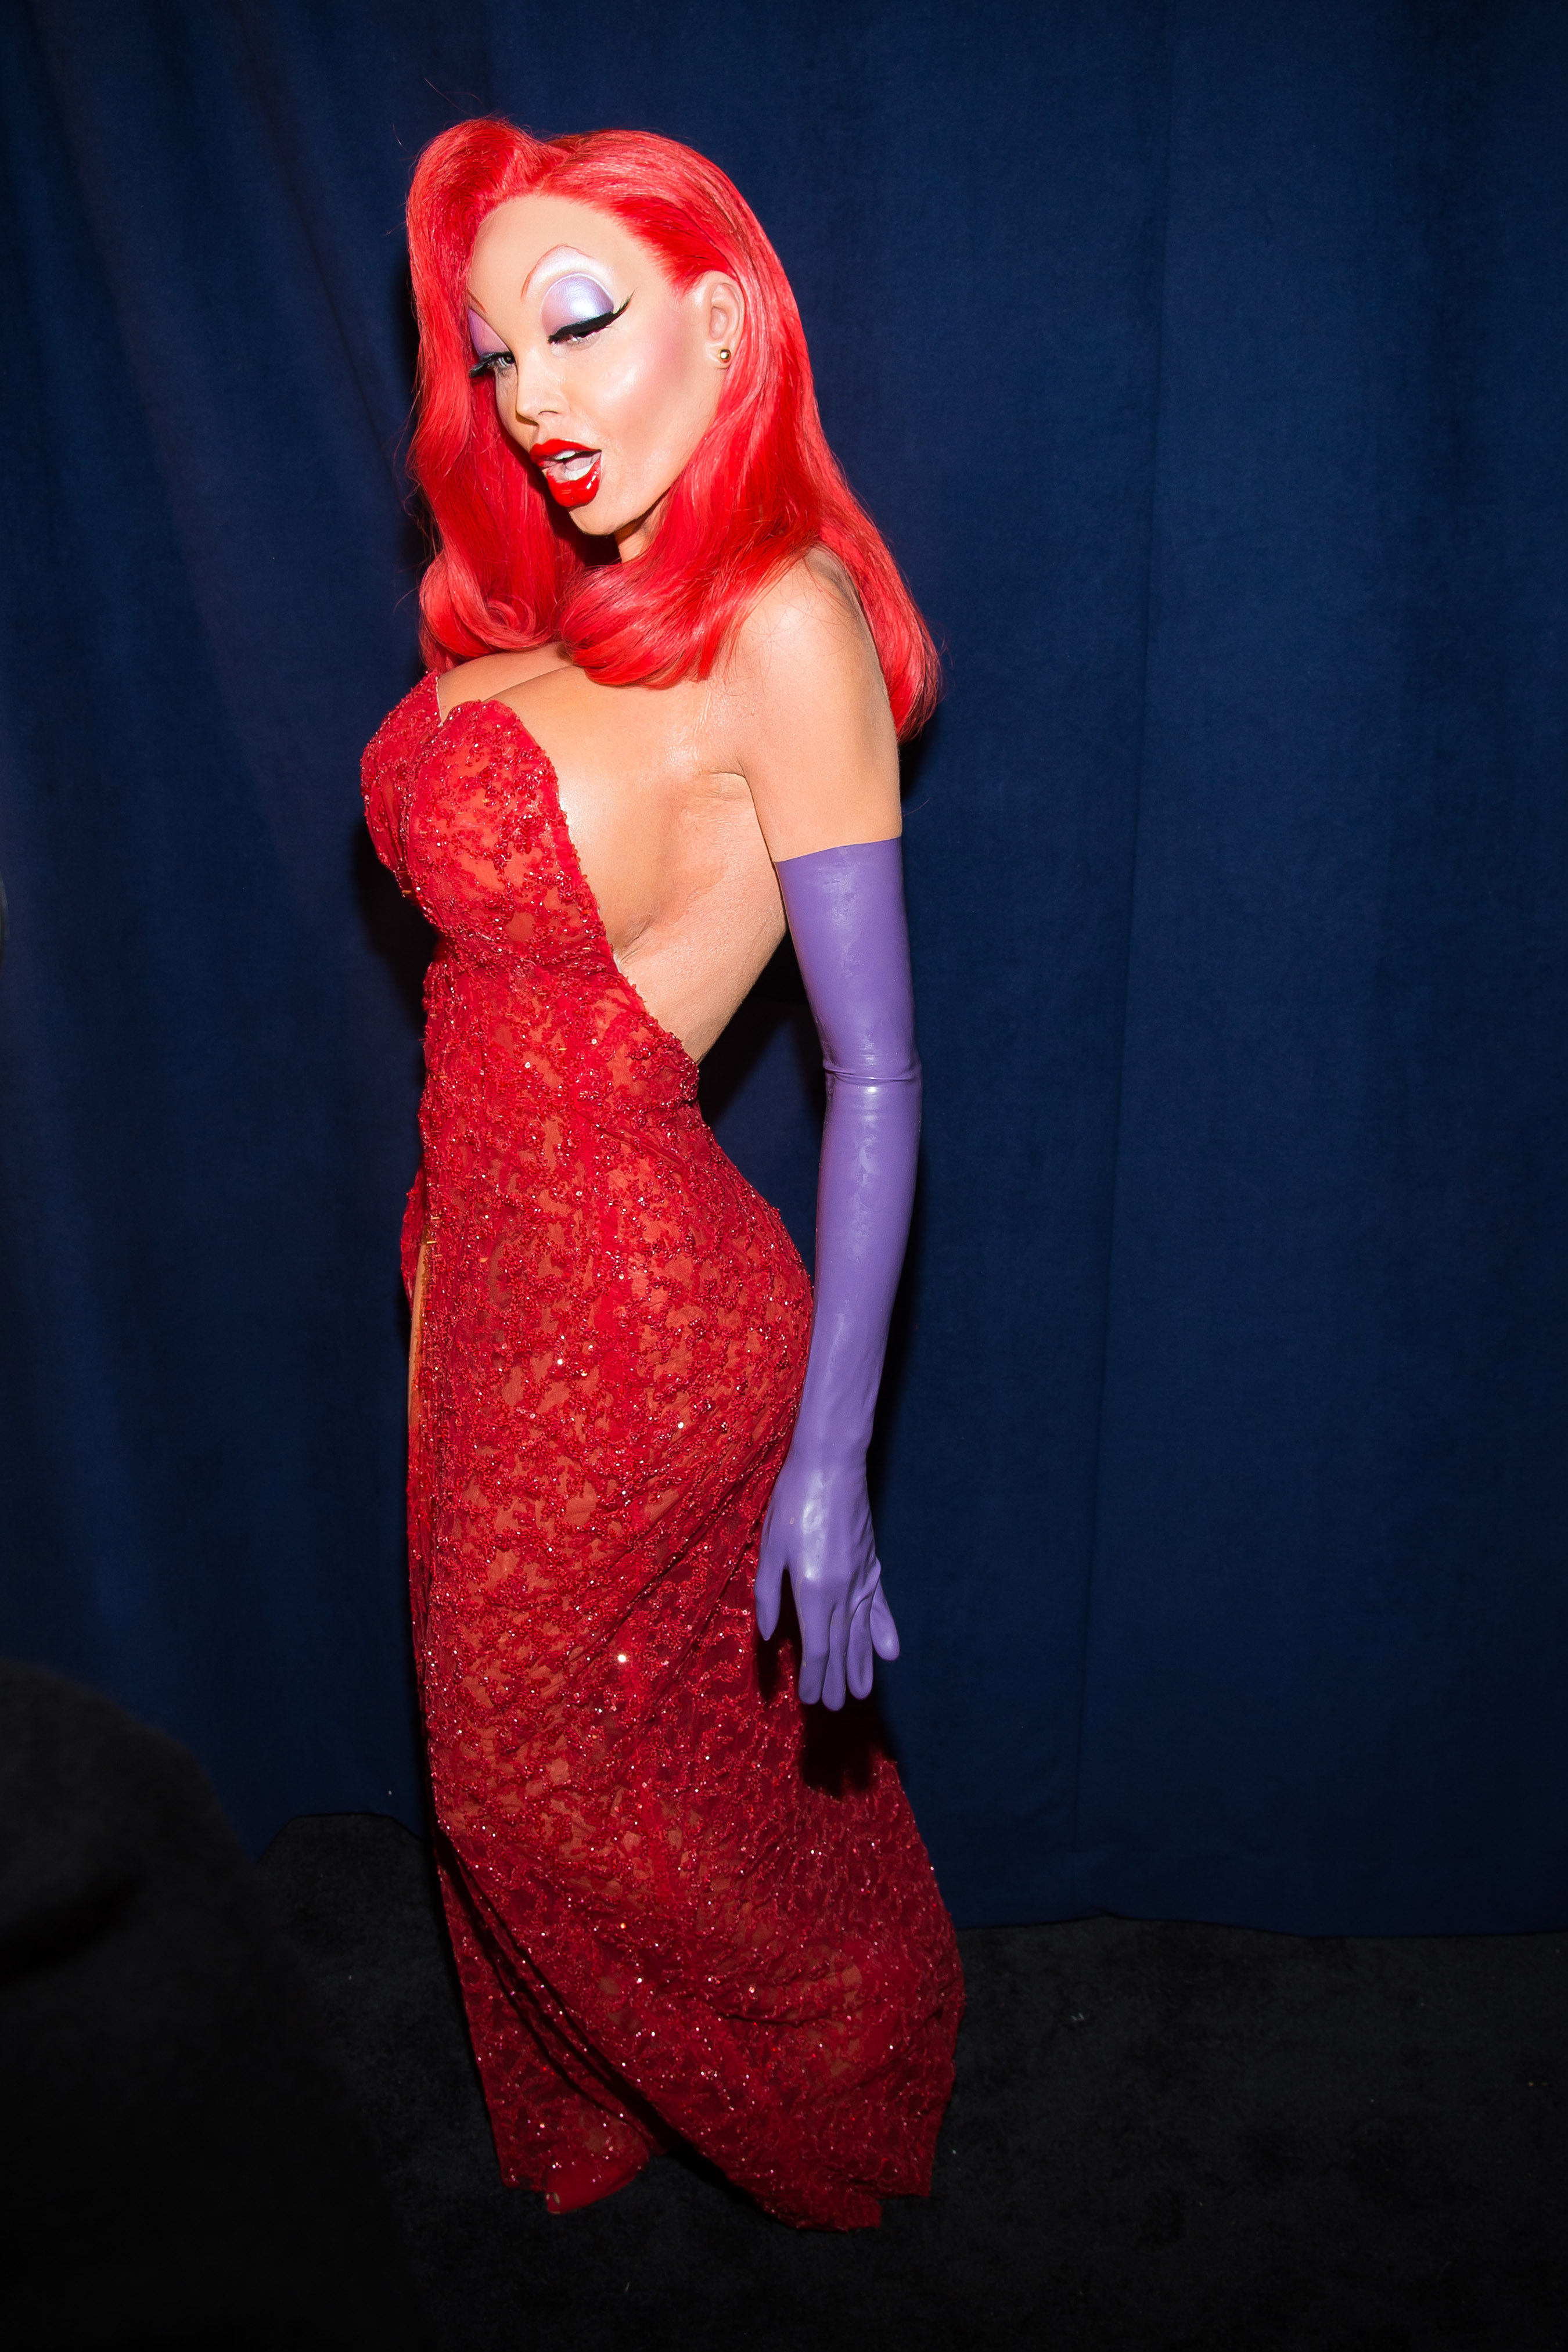 Heidi Klum with heavy prosthetics as Jessica Rabbit in a red dress.